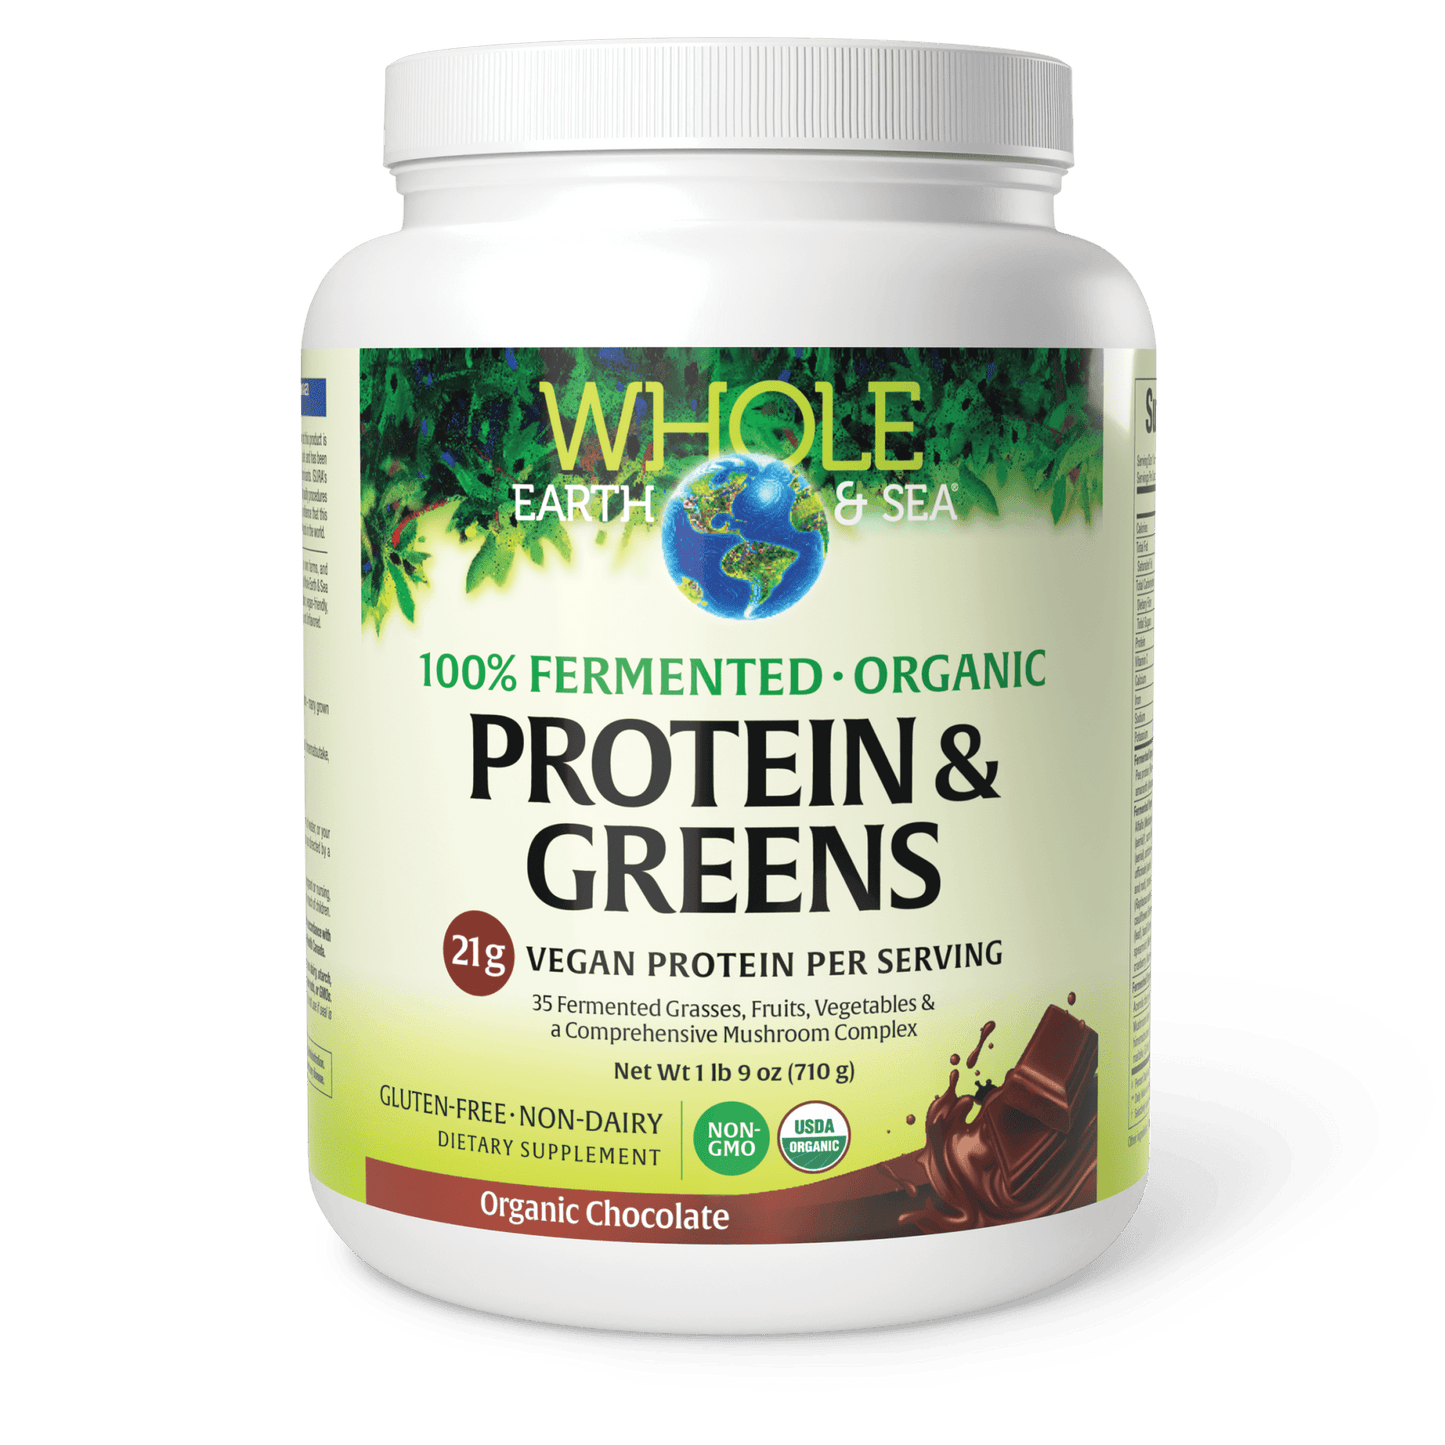 100% Fermented Organic Protein & Greens Chocolate|variant|hi-res|35535U